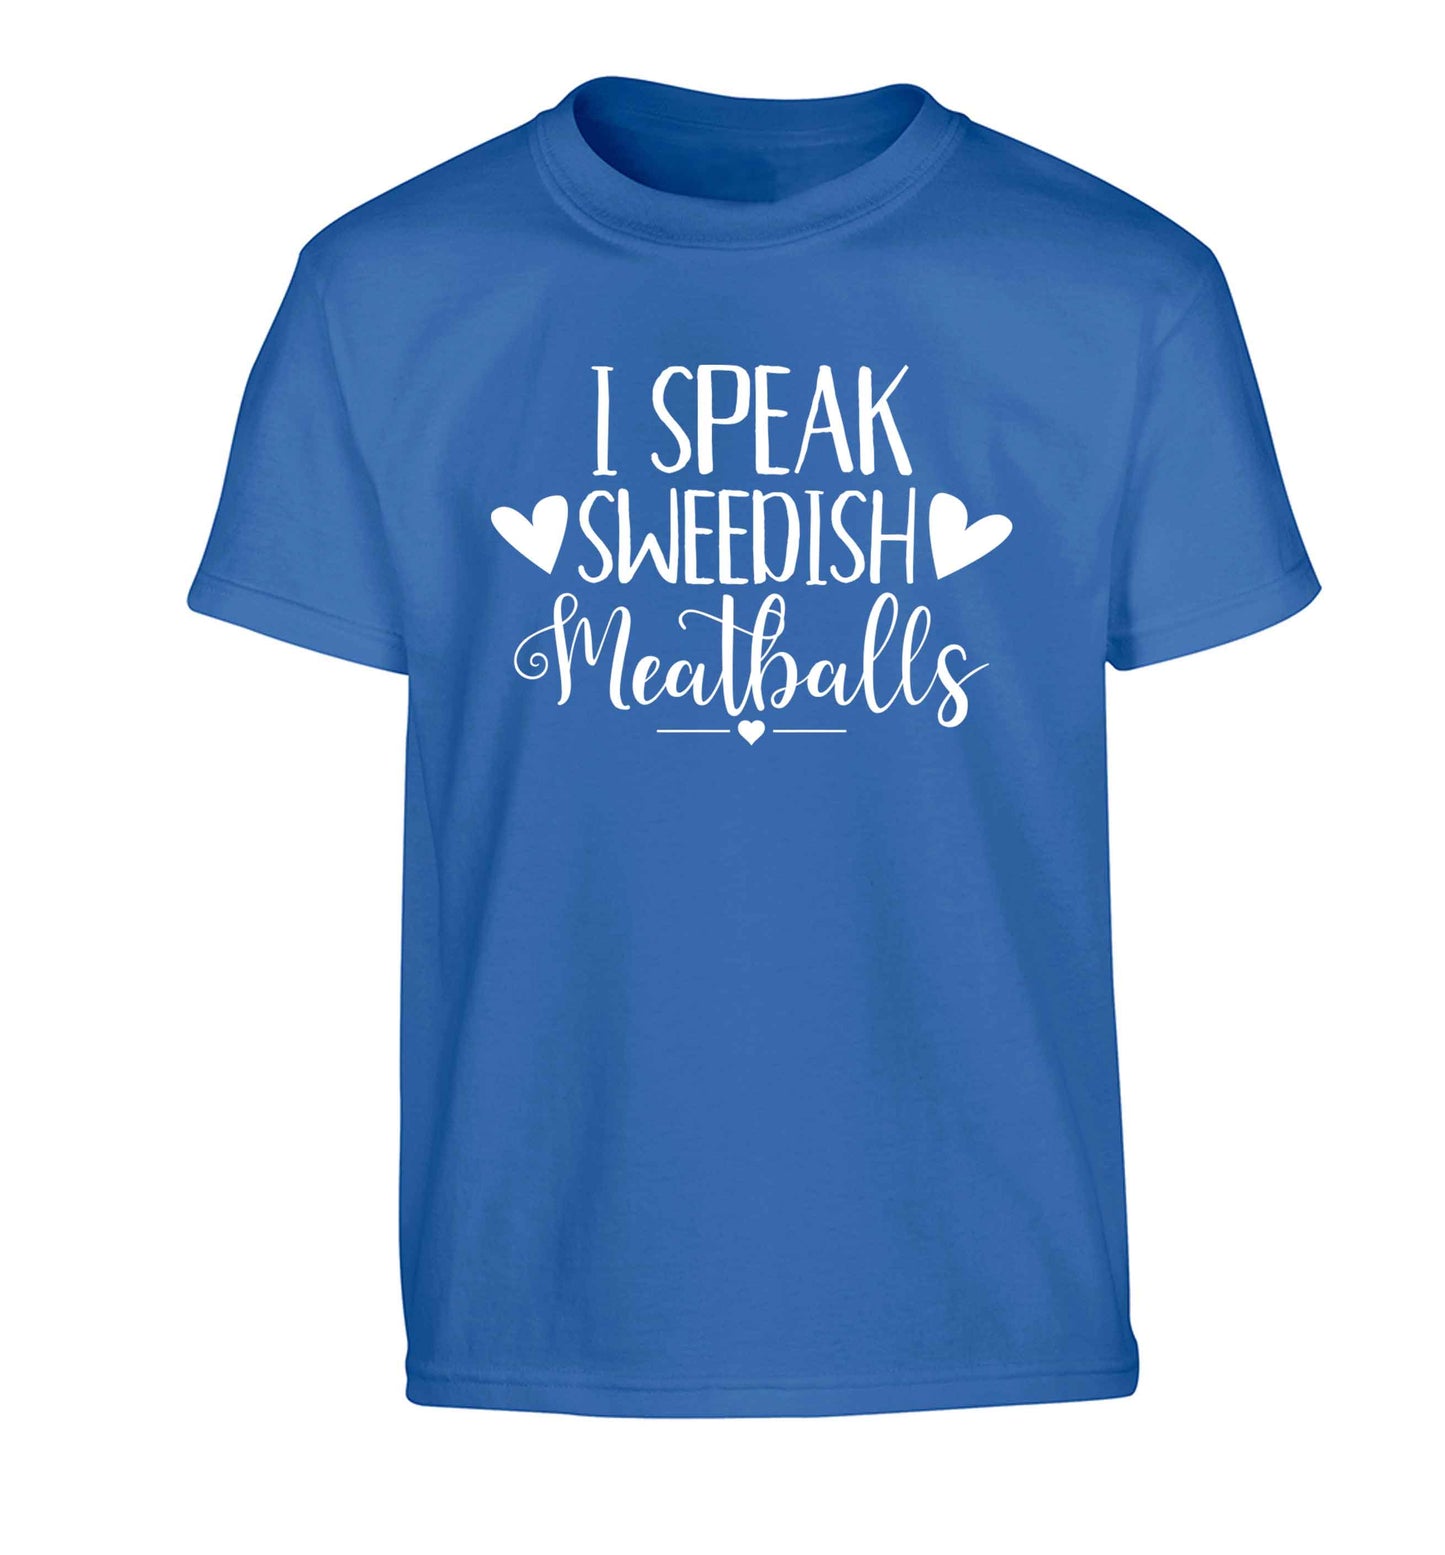 I speak sweedish...meatballs Children's blue Tshirt 12-13 Years